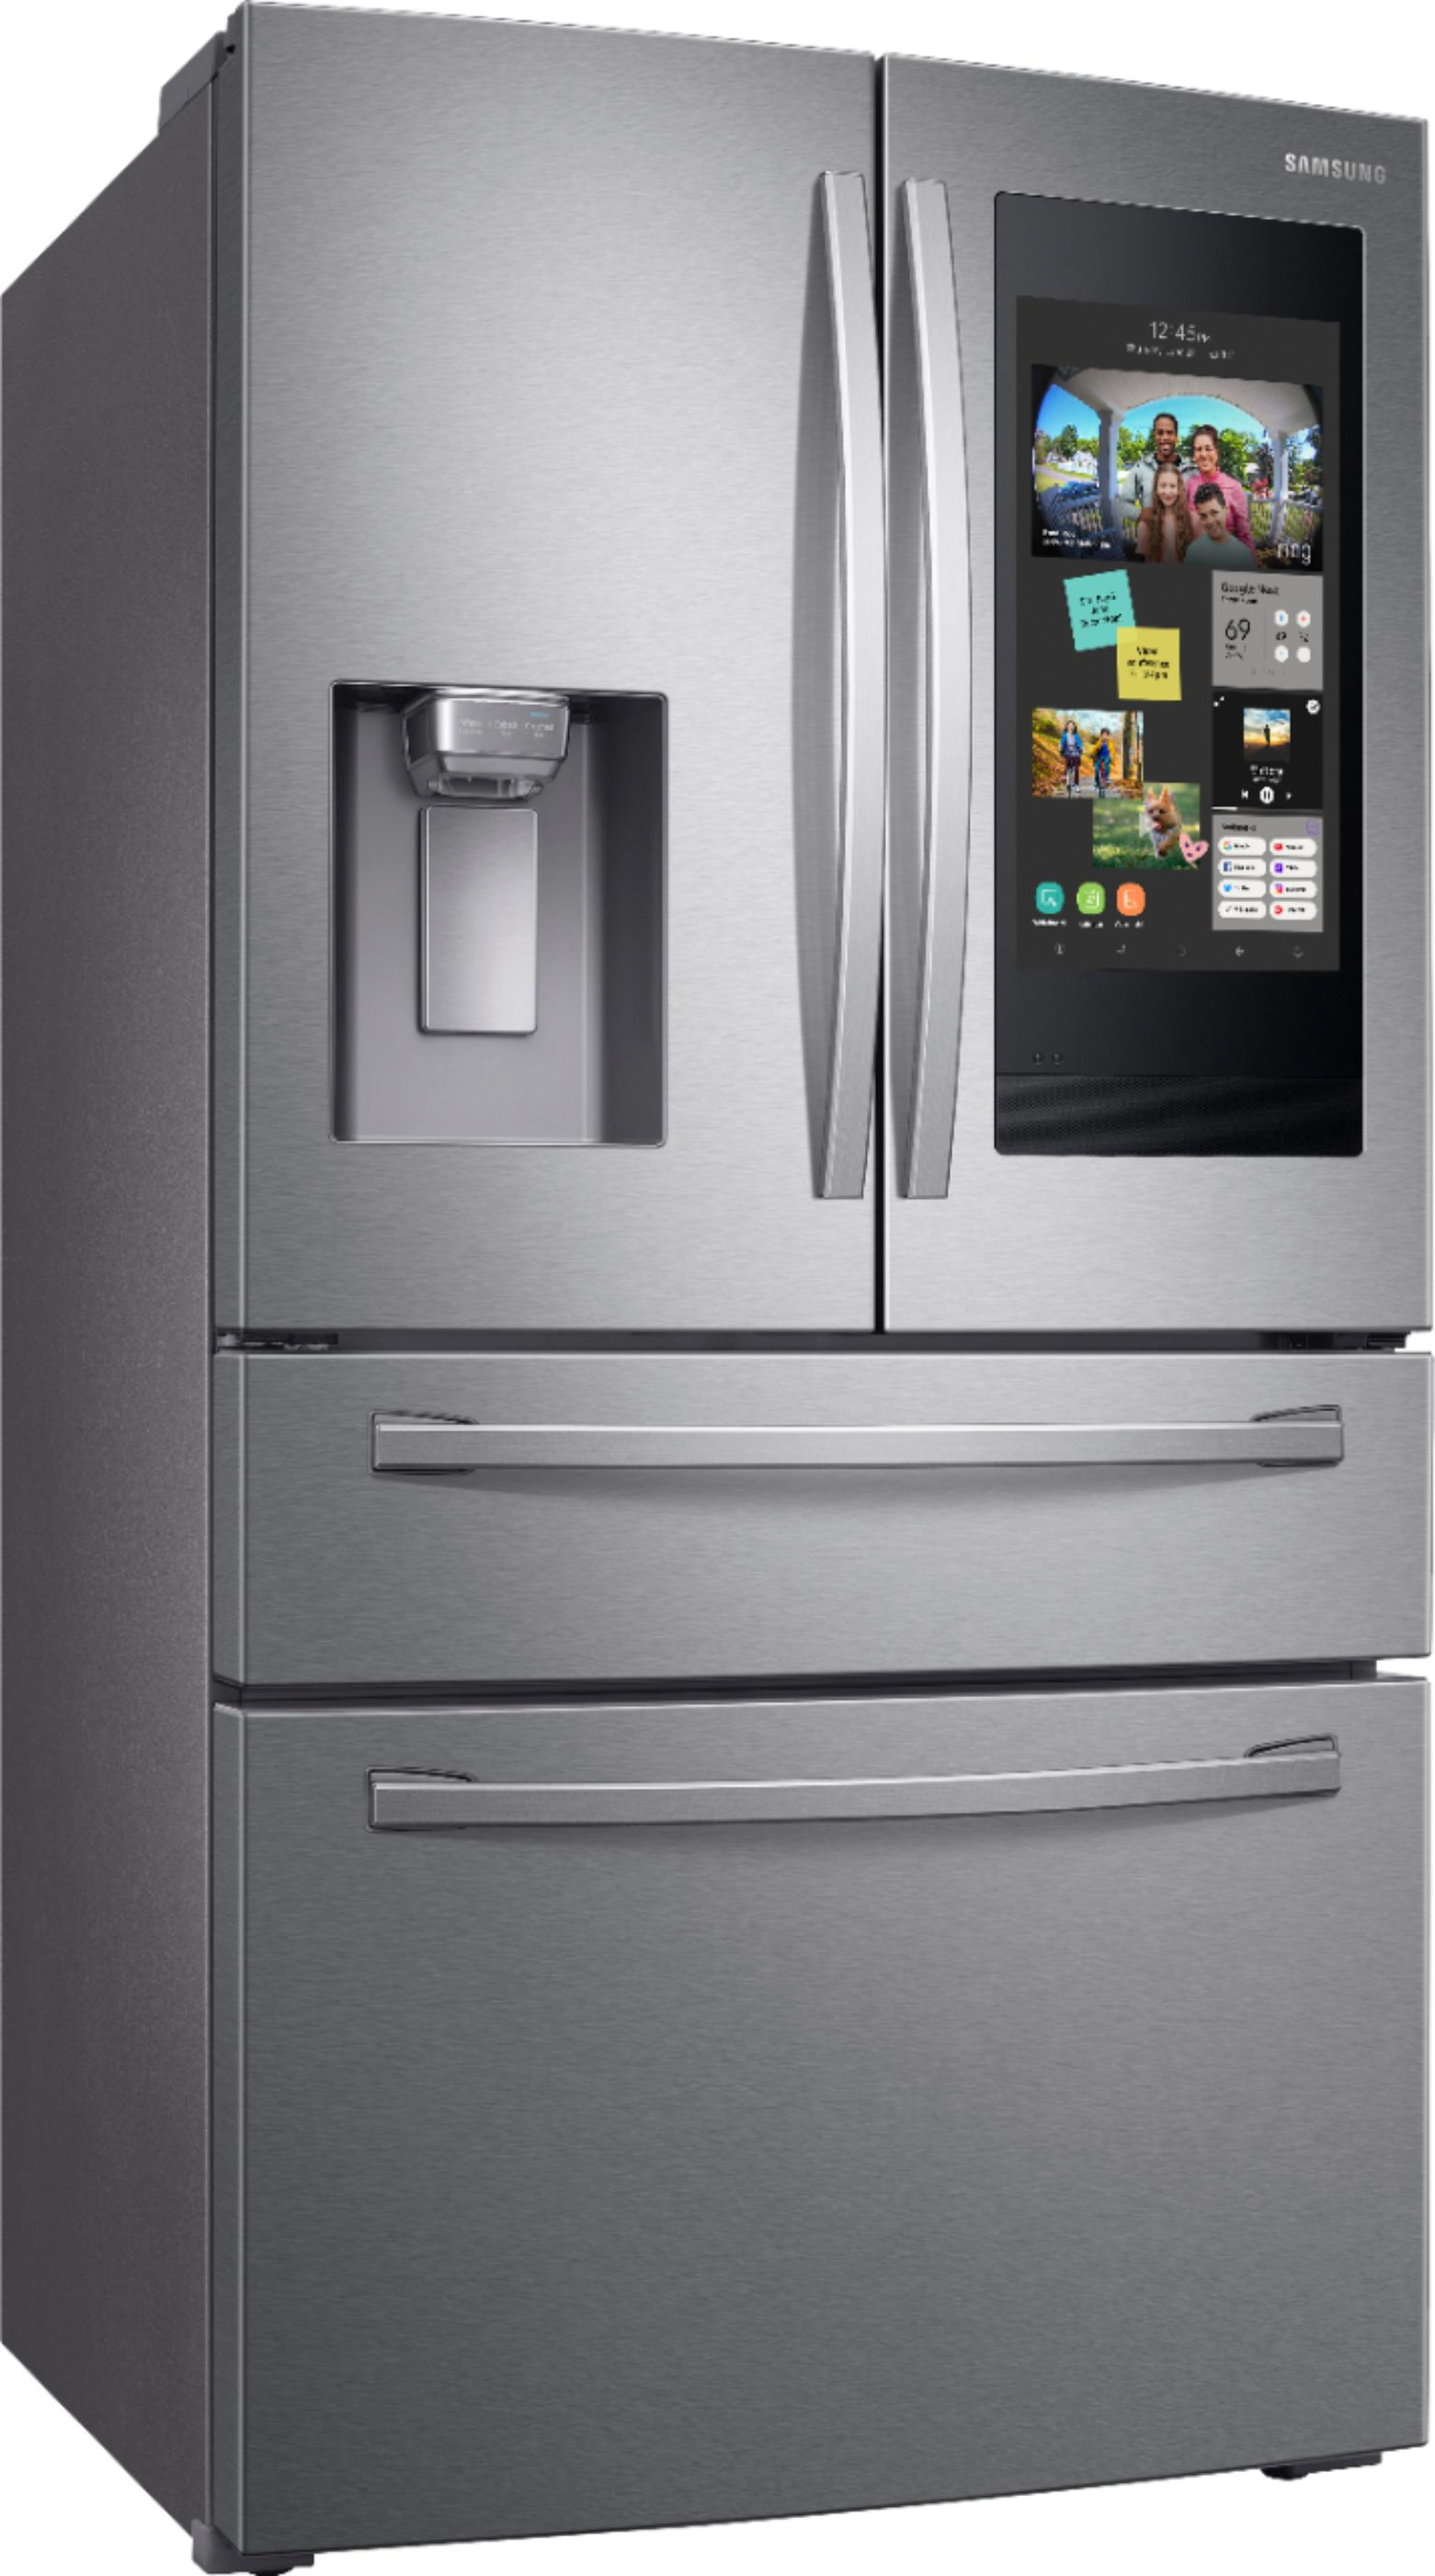 Samsung Family Hub French-Door Refrigerator